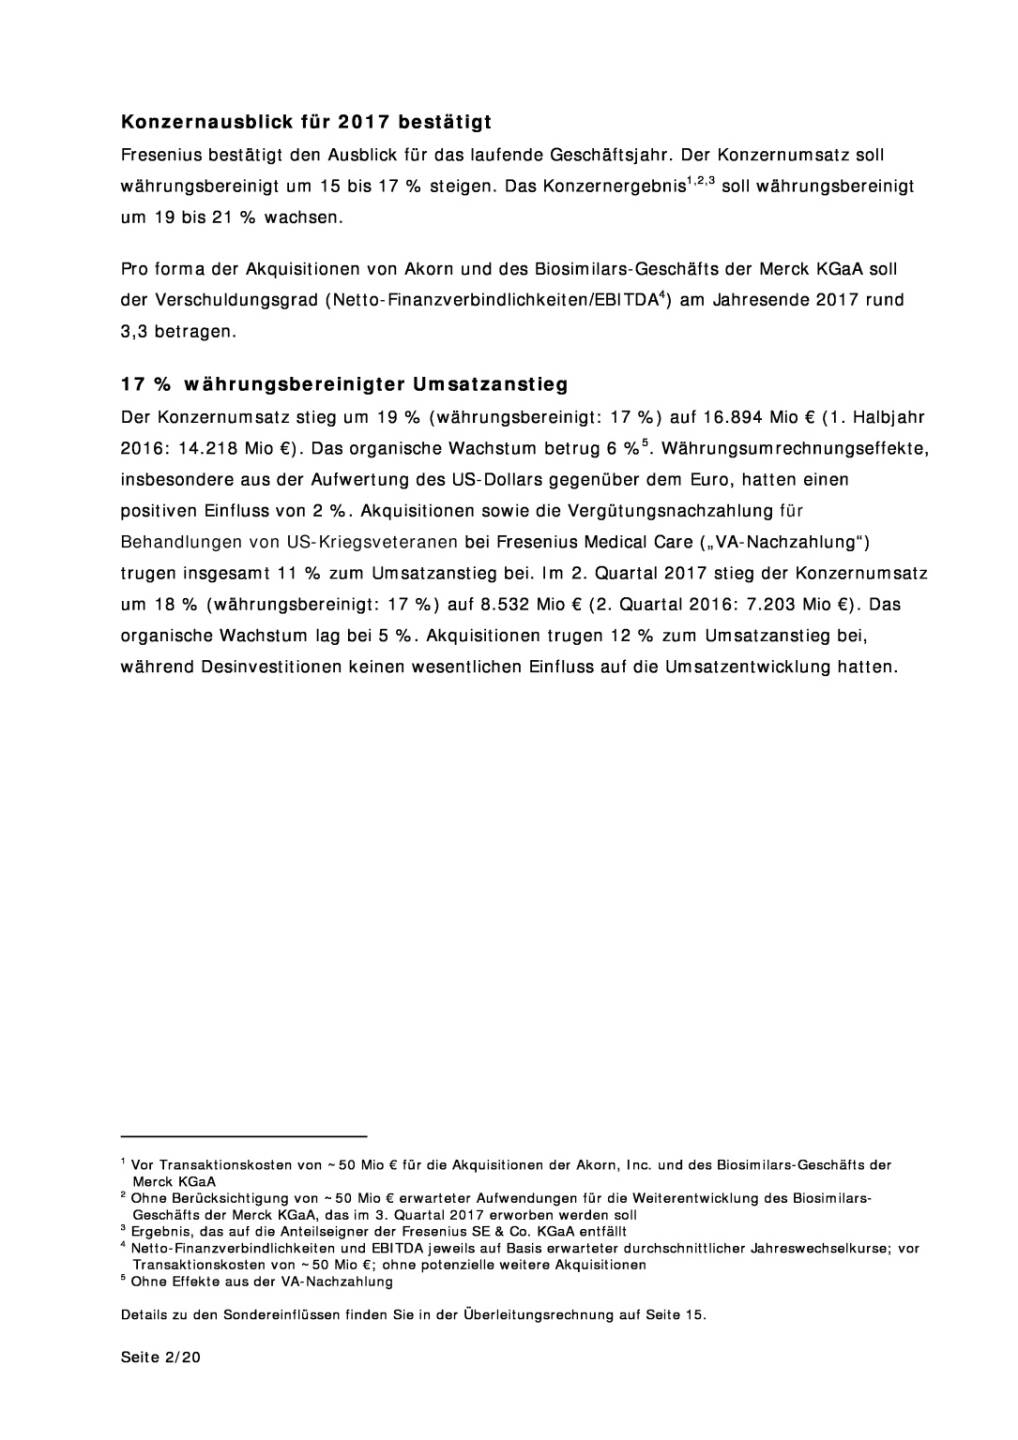 Fresenius: Q2, Seite 2/20, komplettes Dokument unter http://boerse-social.com/static/uploads/file_2302_fresenius_q2.pdf